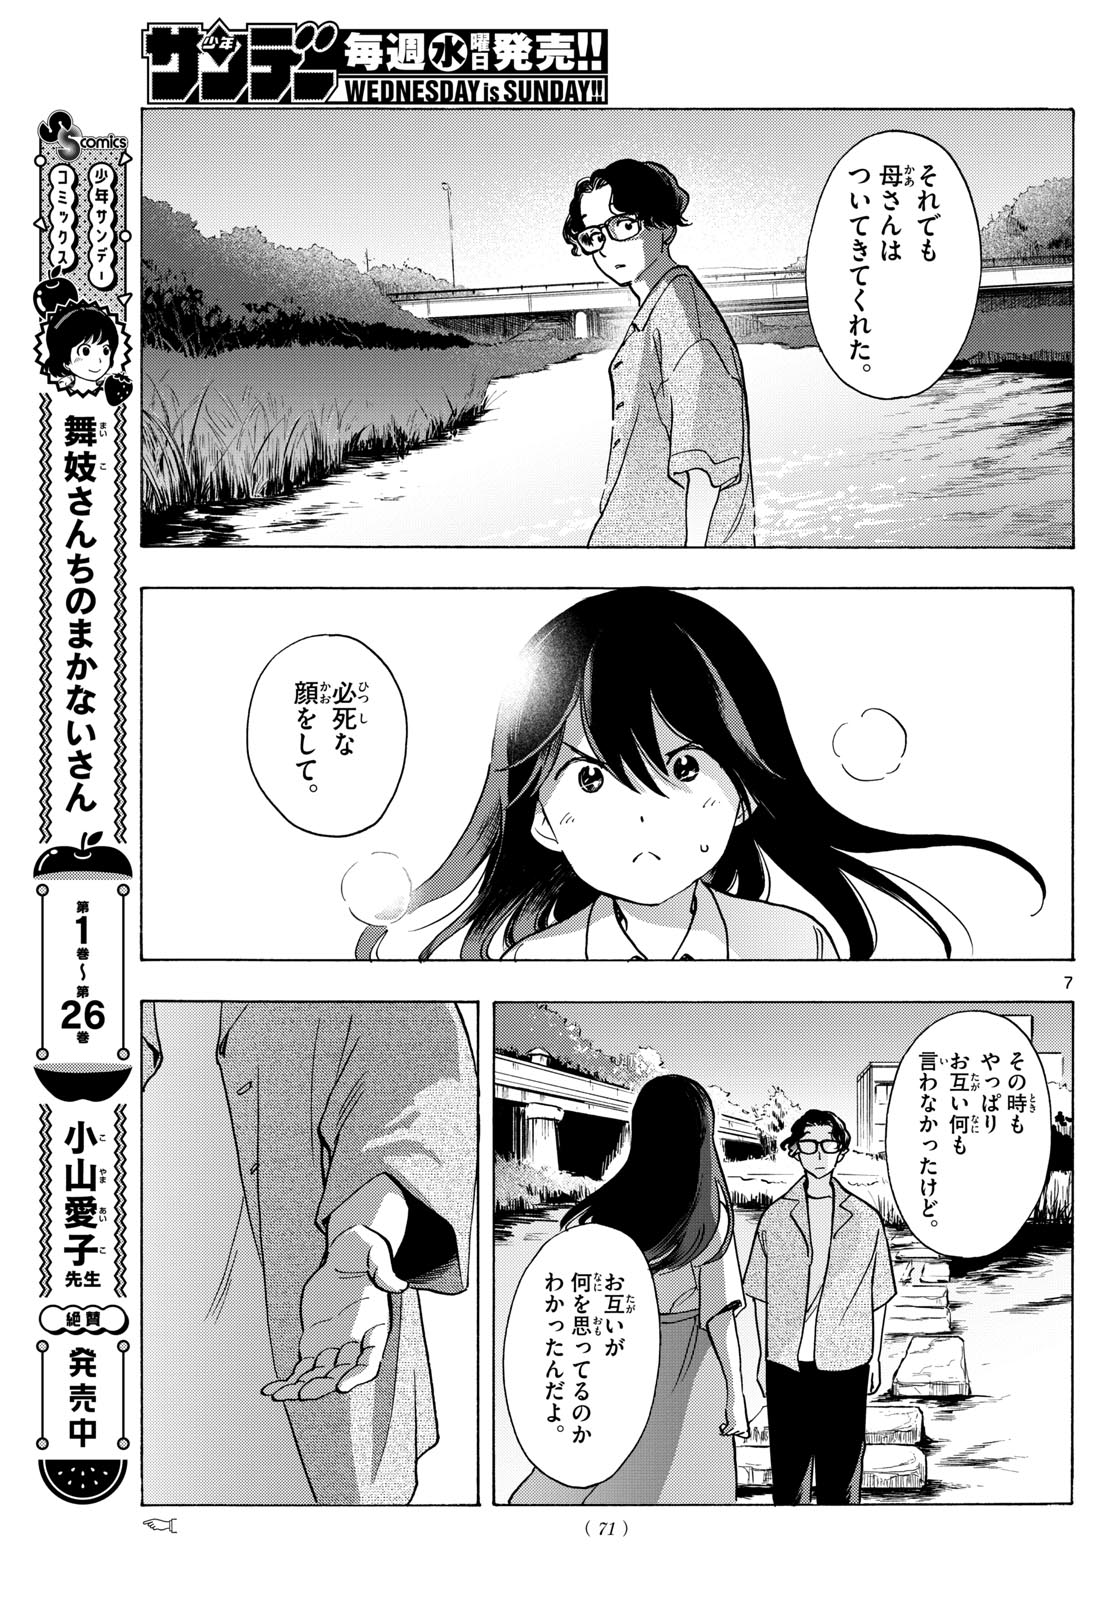 Maiko-san Chi no Makanai-san - Chapter 307 - Page 7